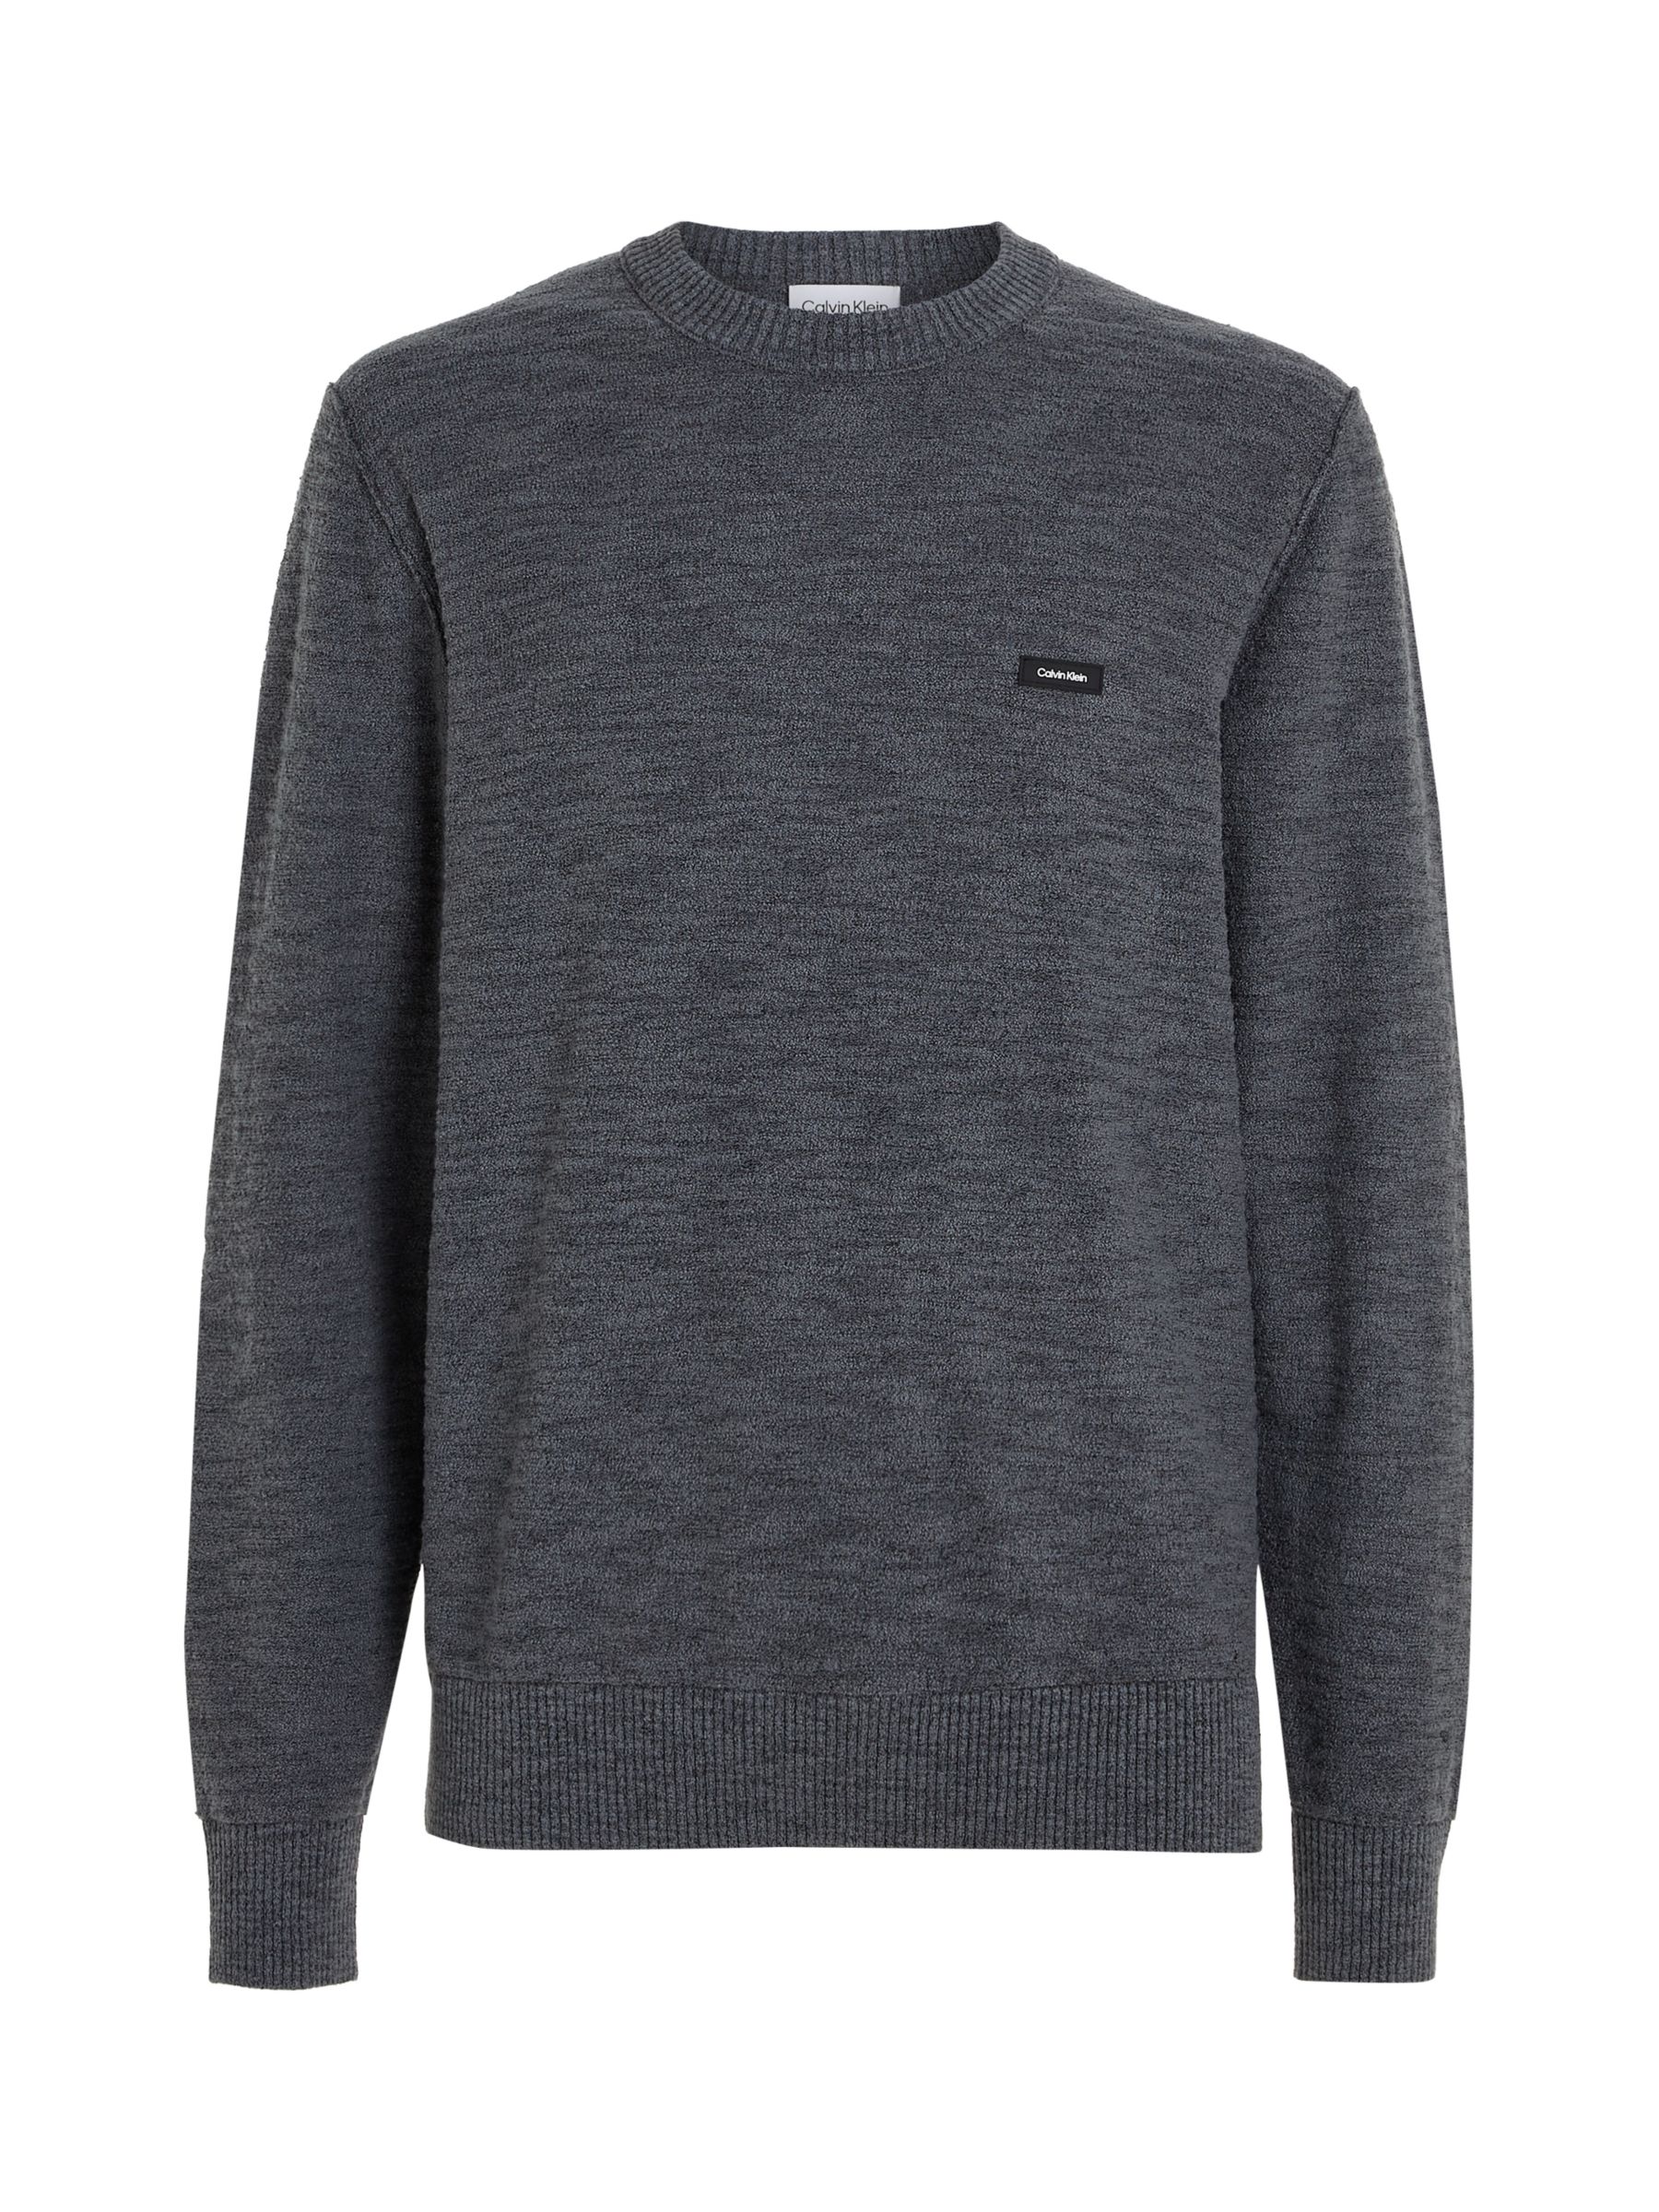 Calvin Klein Winter Slub Pullover Jumper, Grey, S